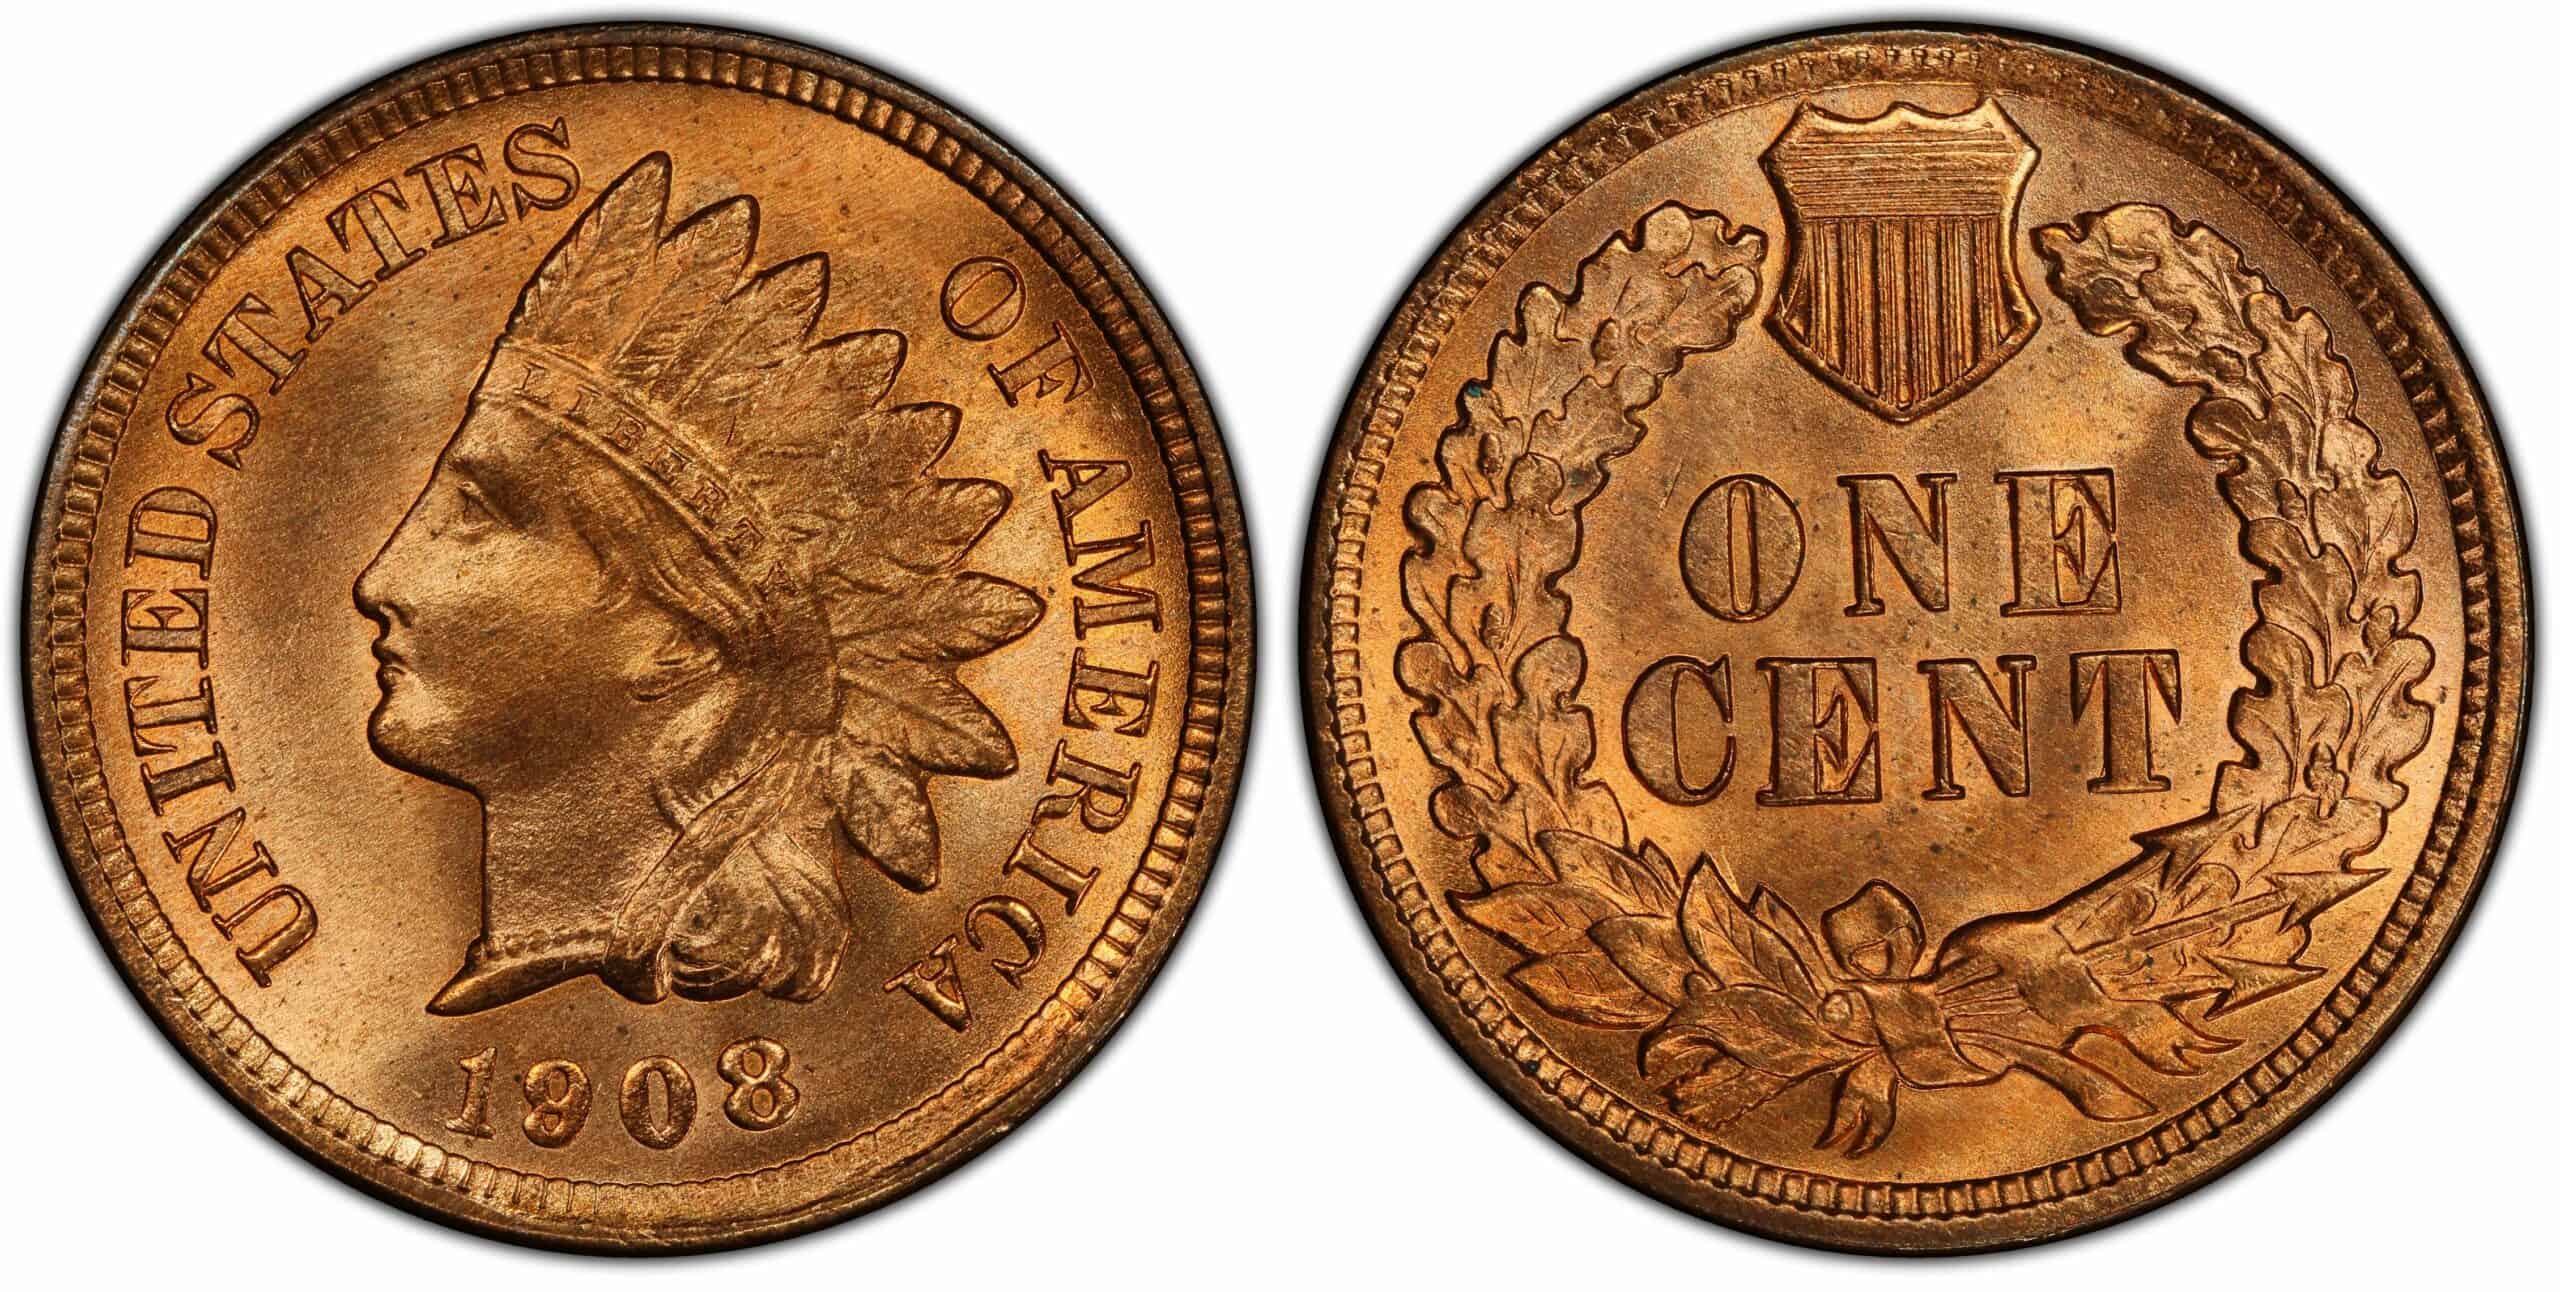 1908 Indian Head Penny Value (Rare Errors, “S” & No Mint Marks)